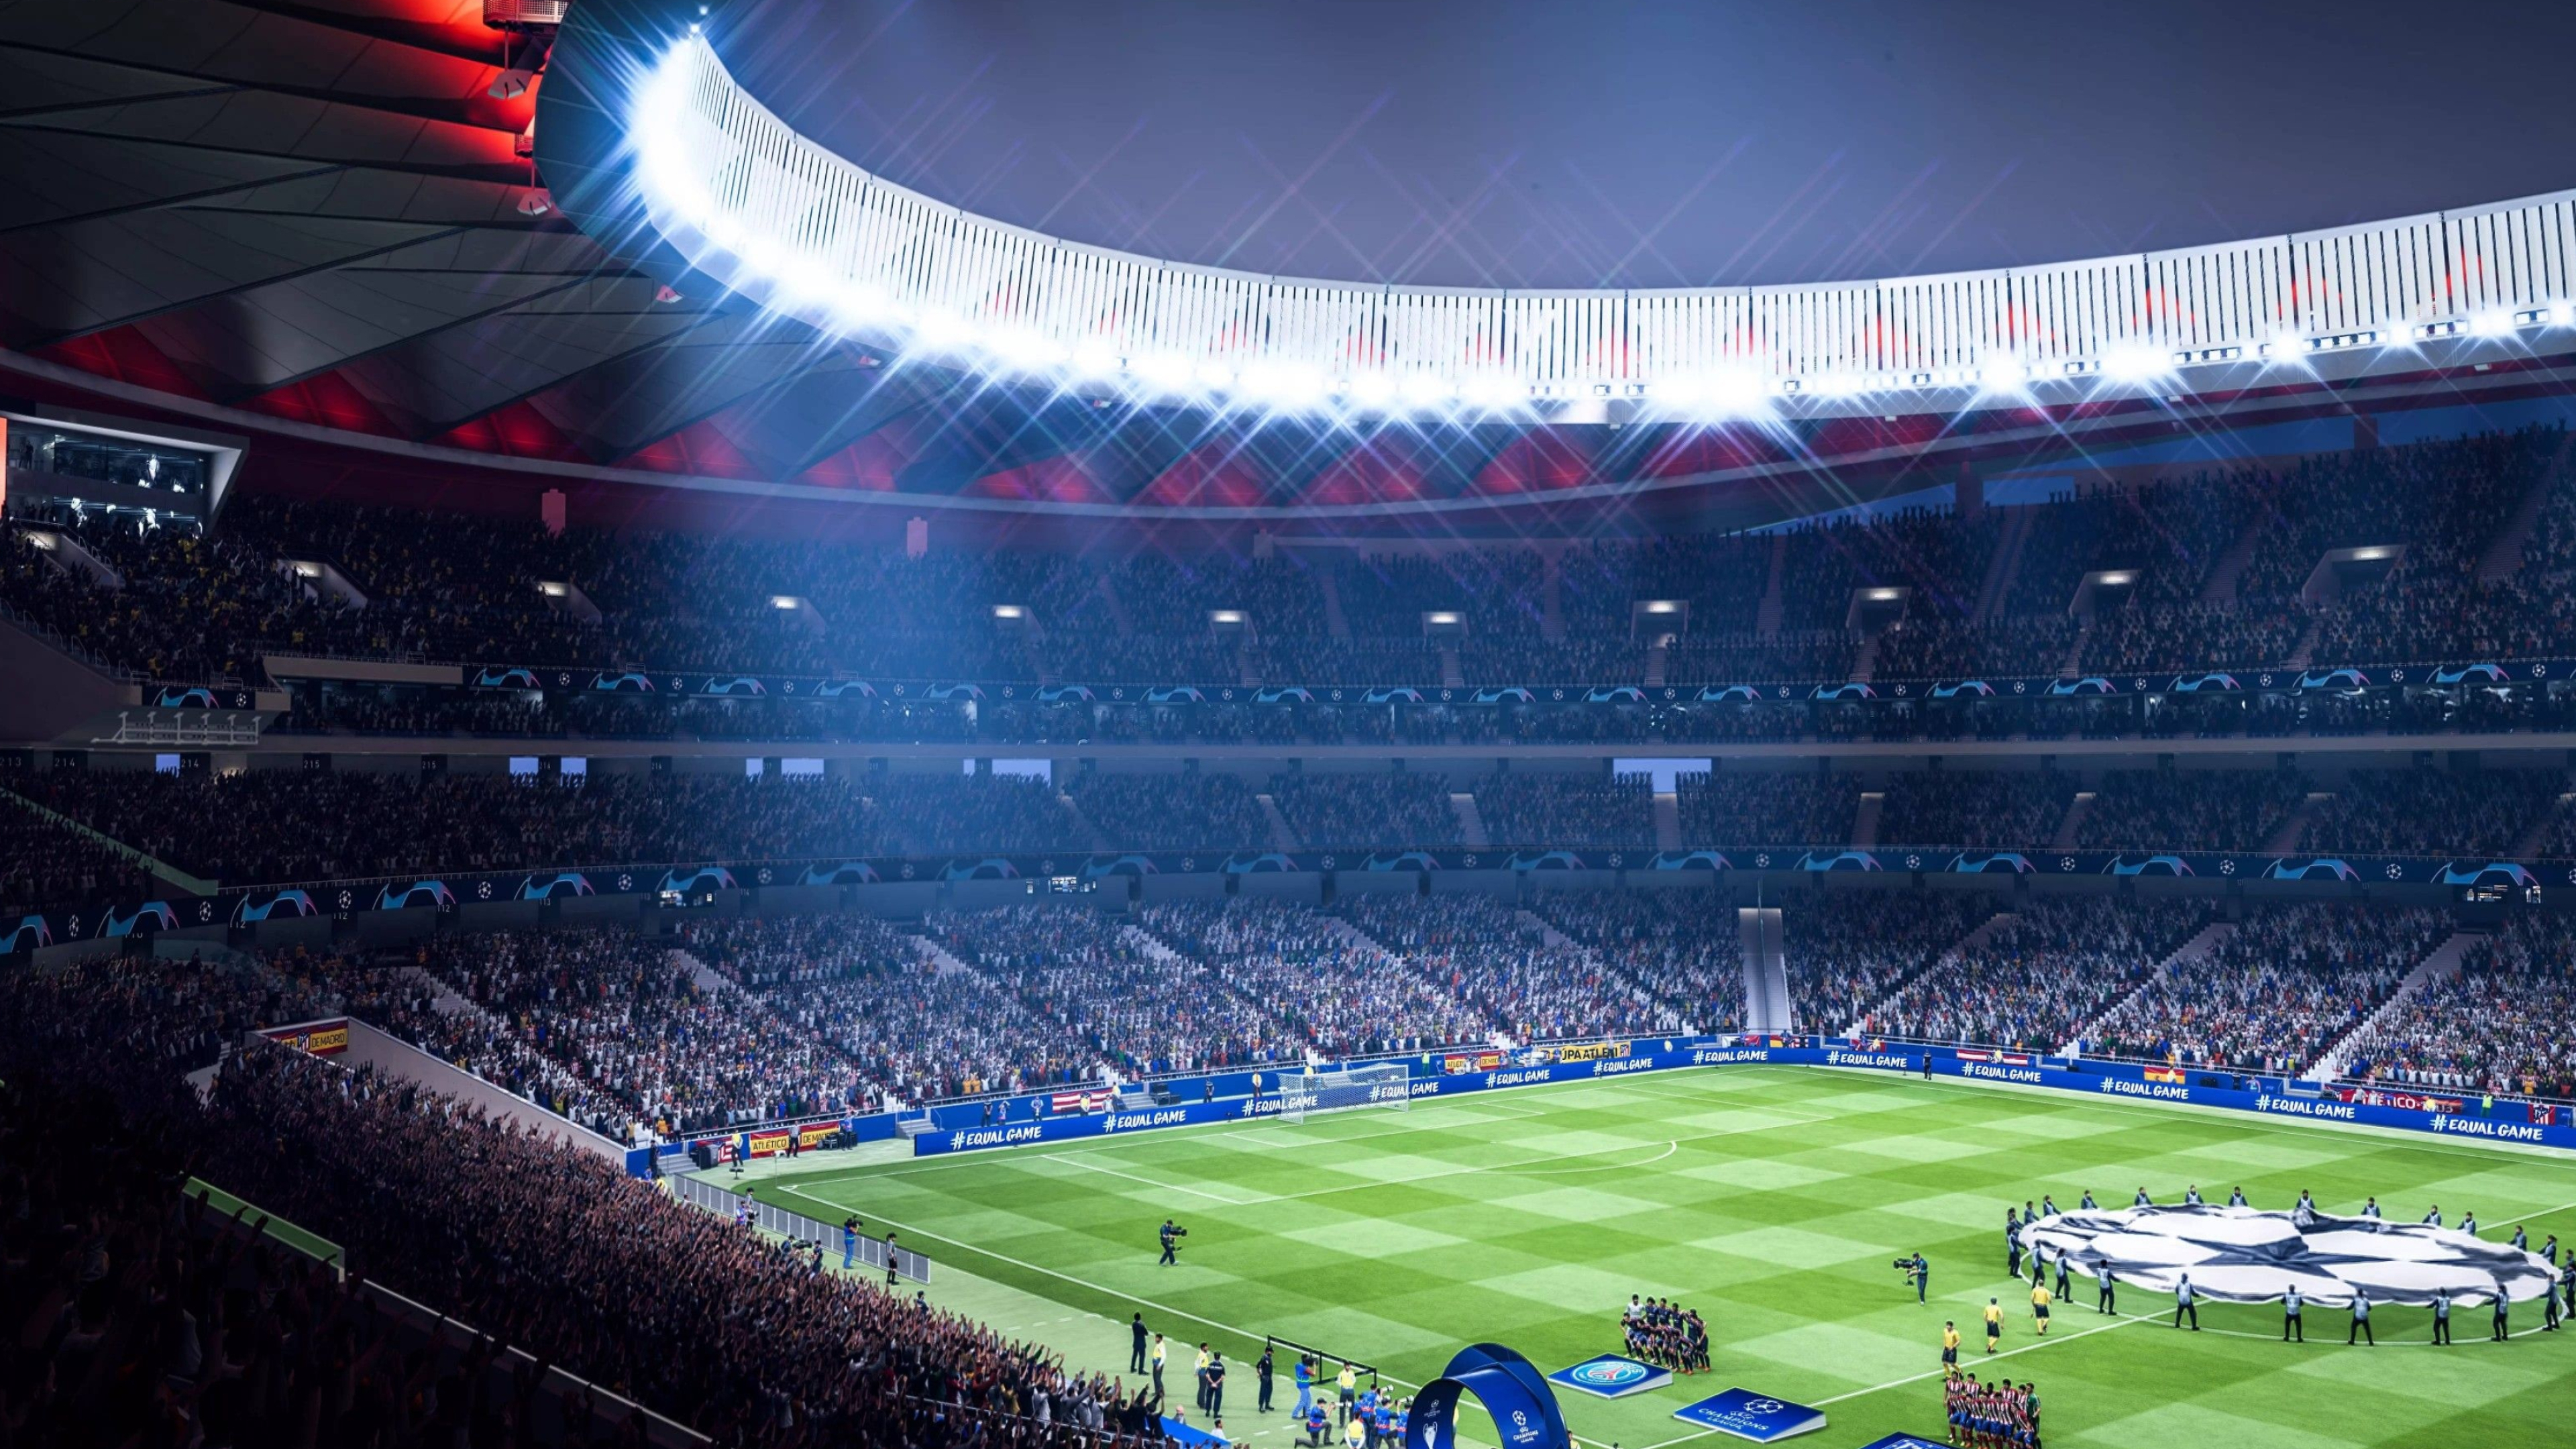 Football Stadium, FIFA 19 4K wallpapers, Gaming backgrounds, High quality, 3840x2160 4K Desktop